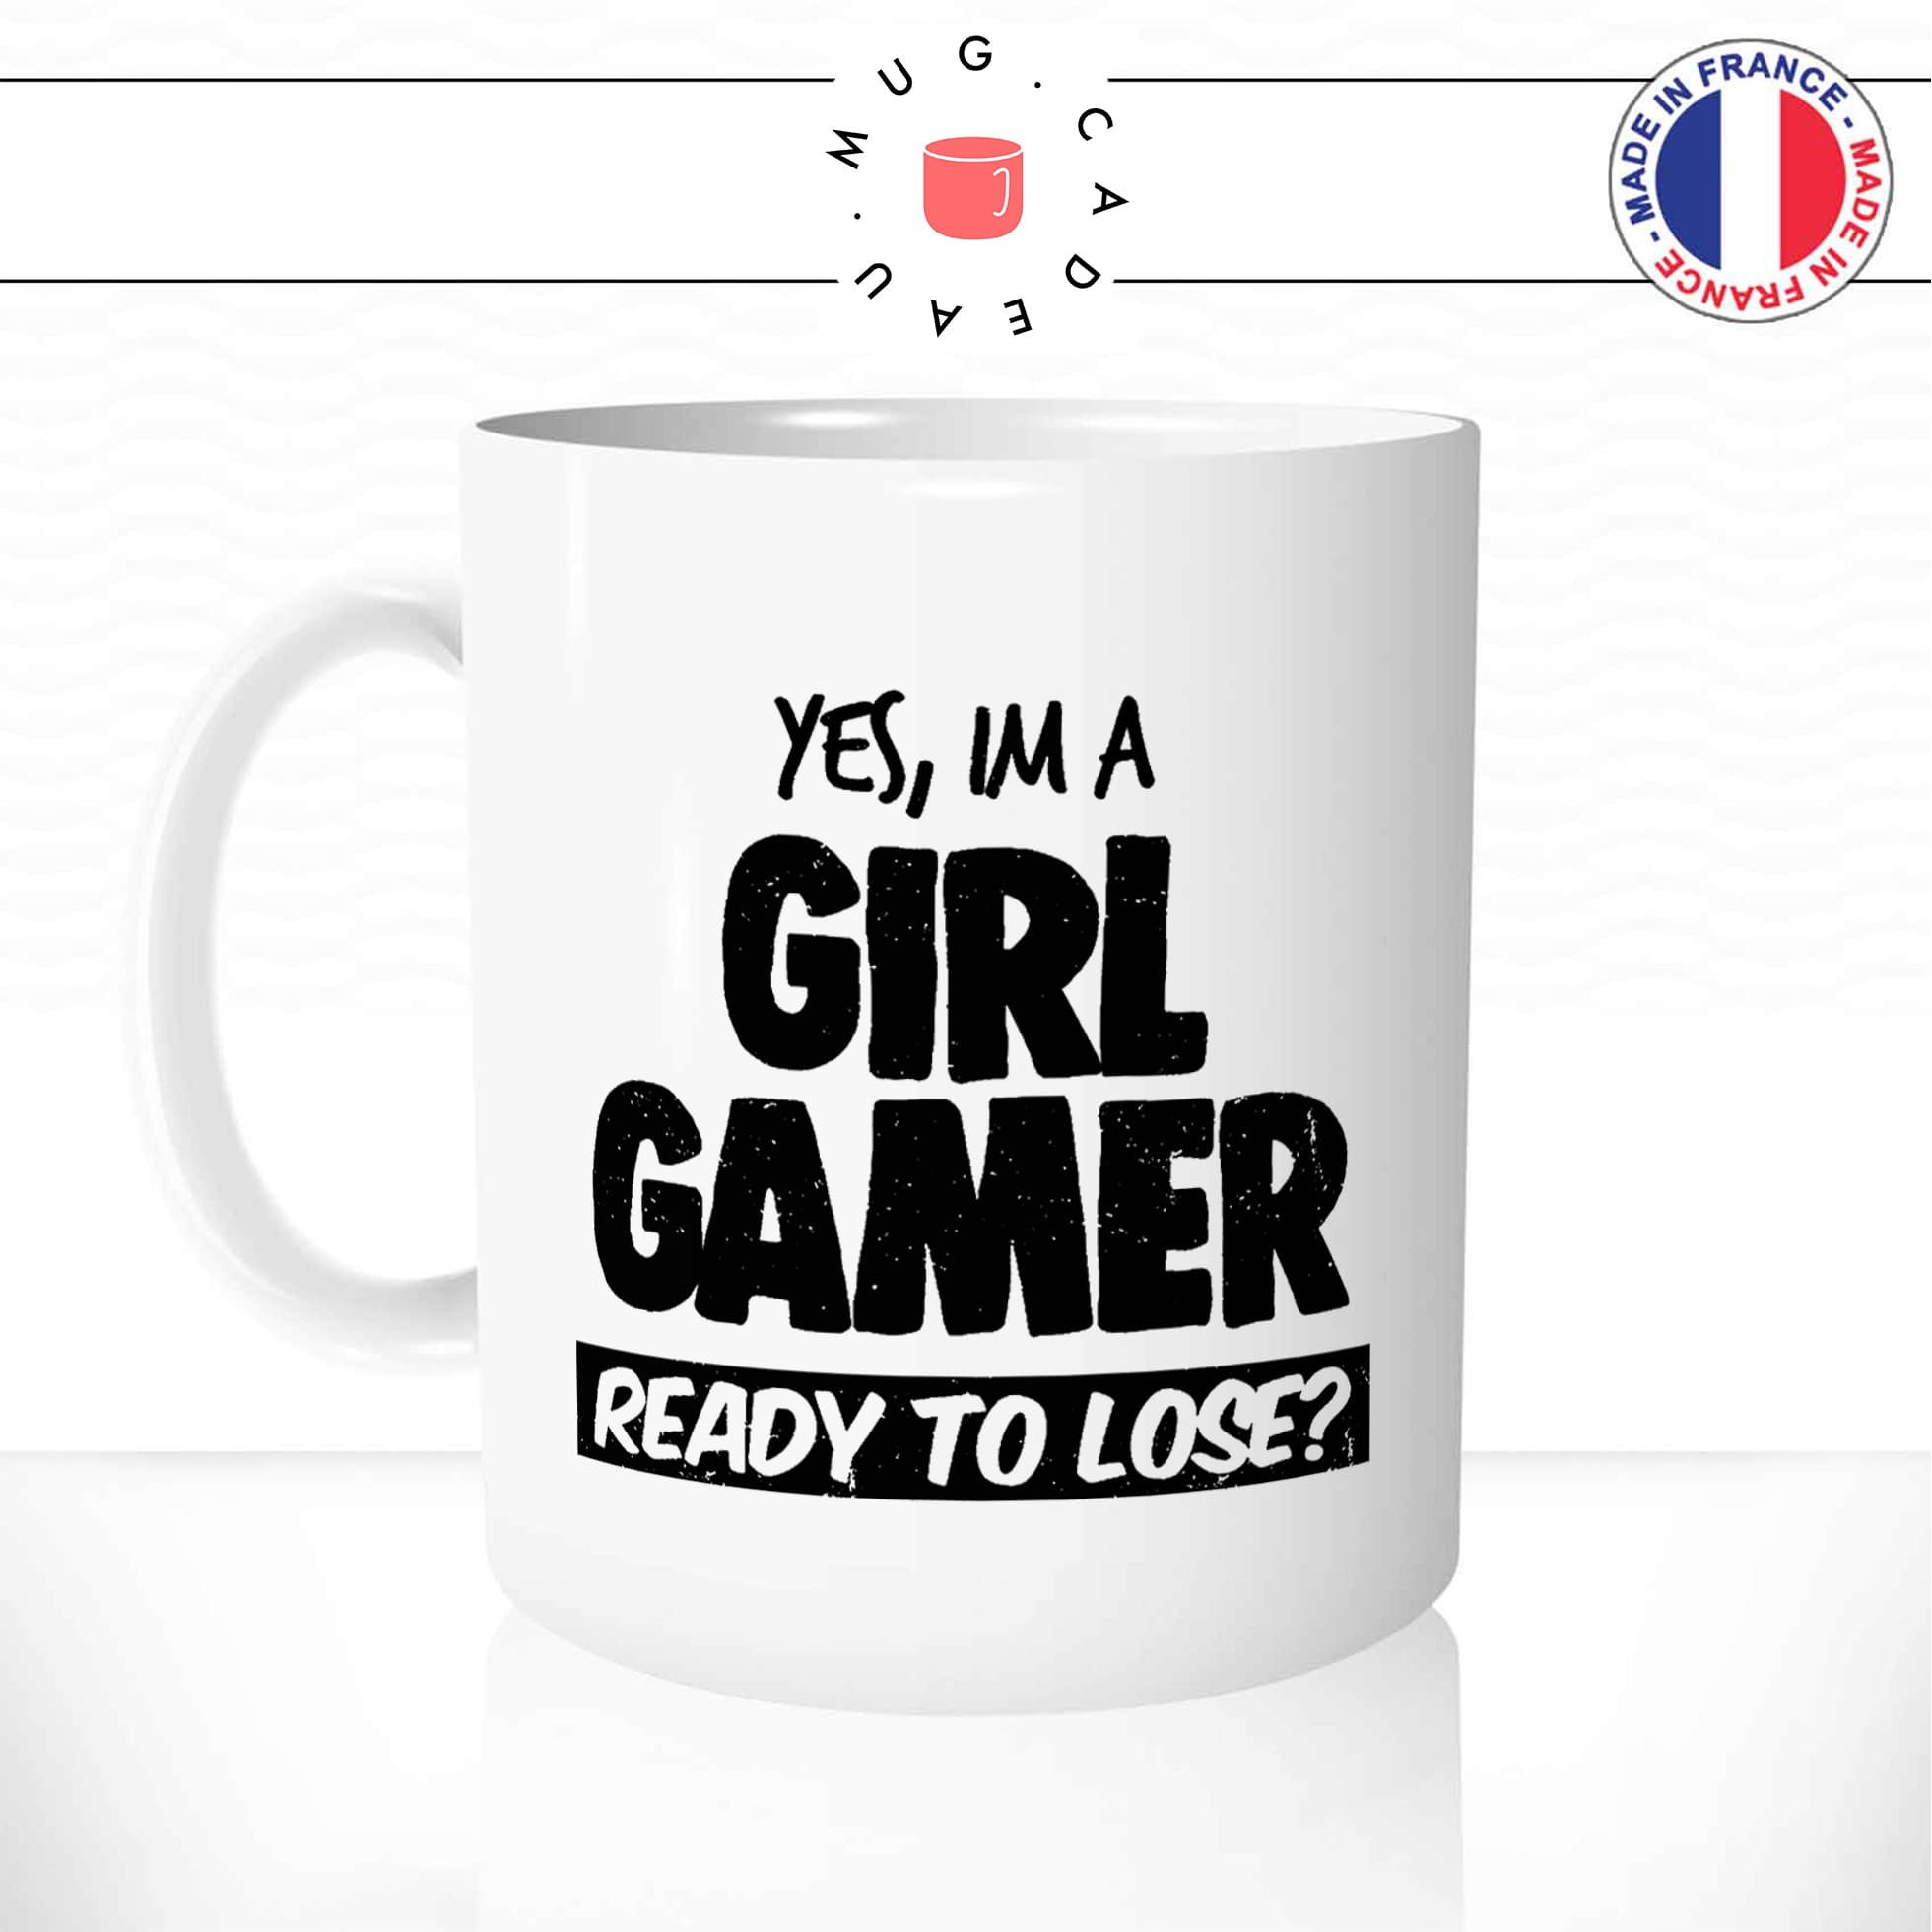 mug-tasse-blanc-unique-girl-gamer-ready-to-loose-gaming-jeux-video-homme-femme-humour-fun-cool-idée-cadeau-original-personnalisé